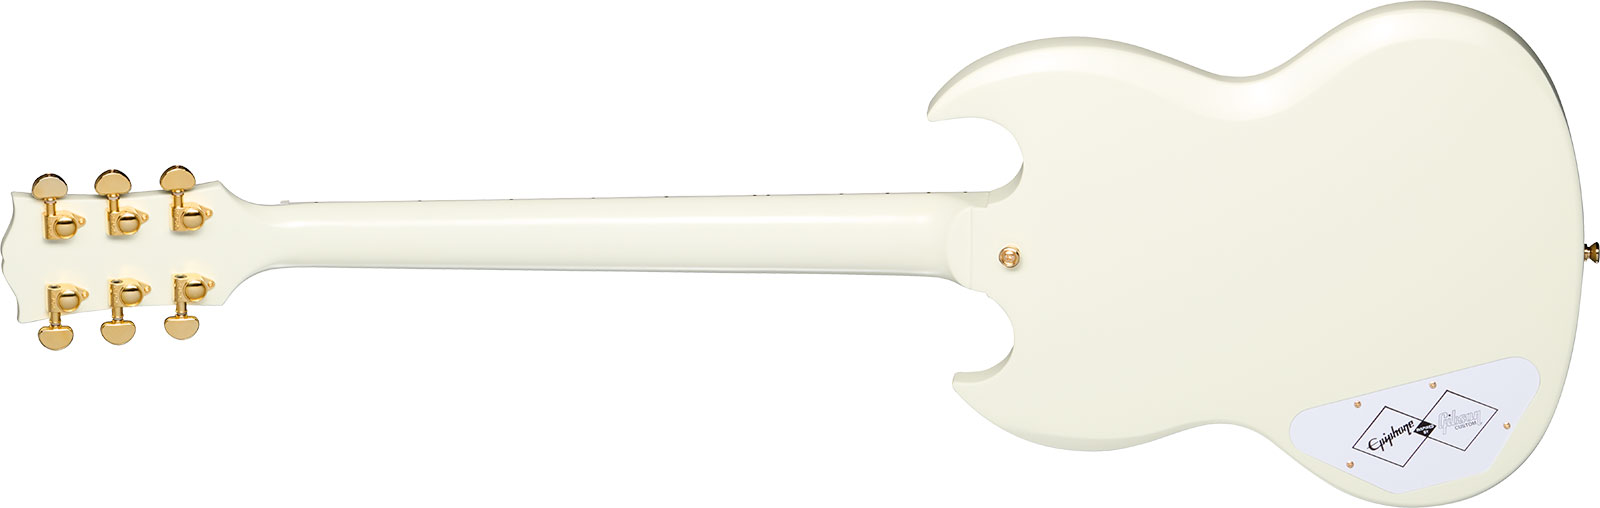 Epiphone Sg Les Paul Custom 1963 Maestro Vibrola Inspired By 2h Trem Eb - Vos Classic White - Guitare Électrique Double Cut - Variation 1